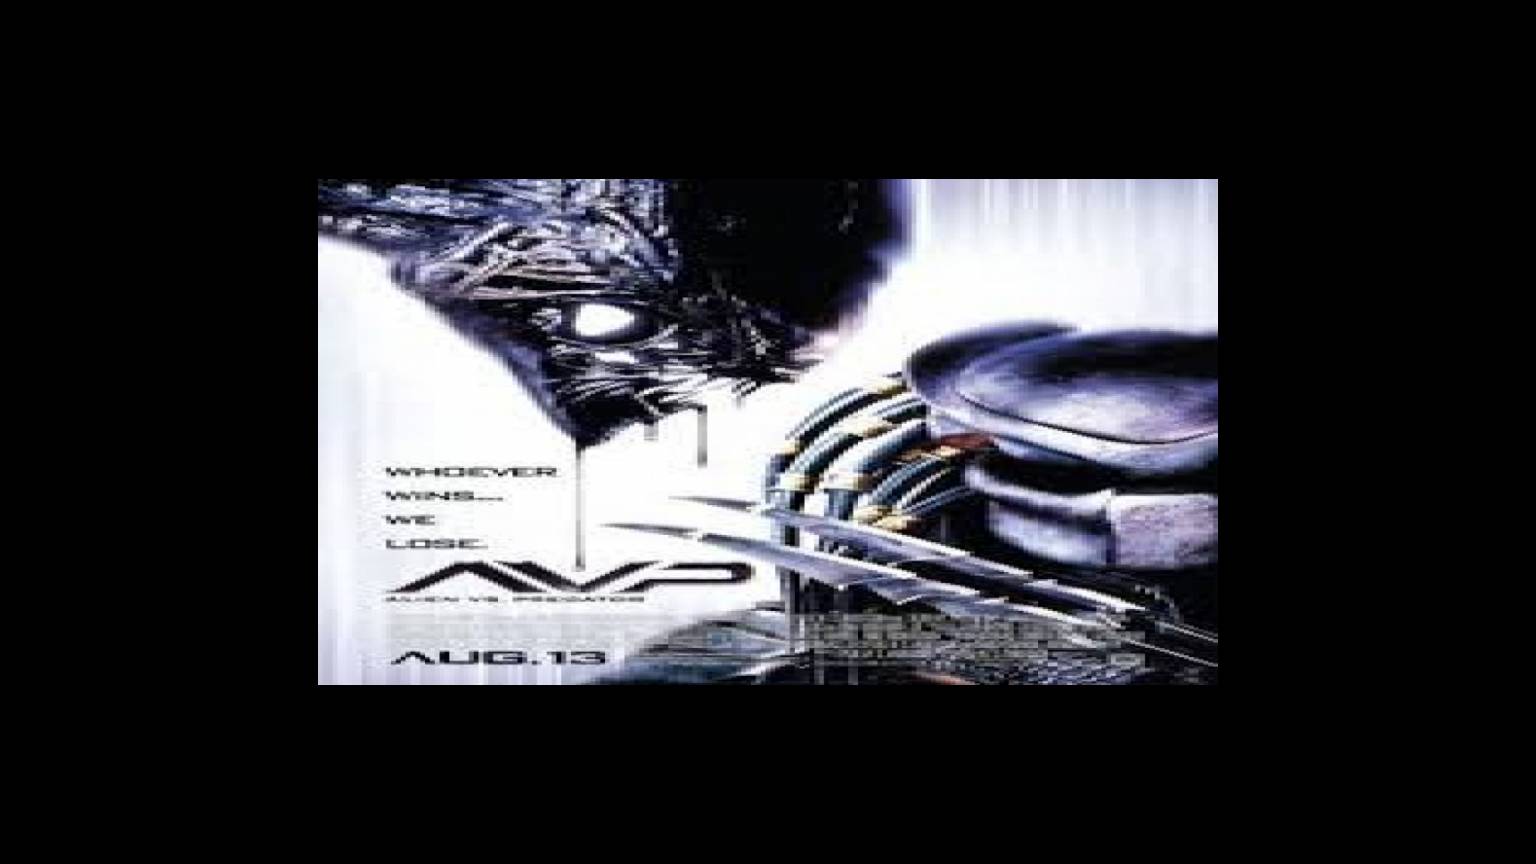 Aliens vs. Predator: Requiem - Gameplay PSP HD 720P (Playstation Portable)  